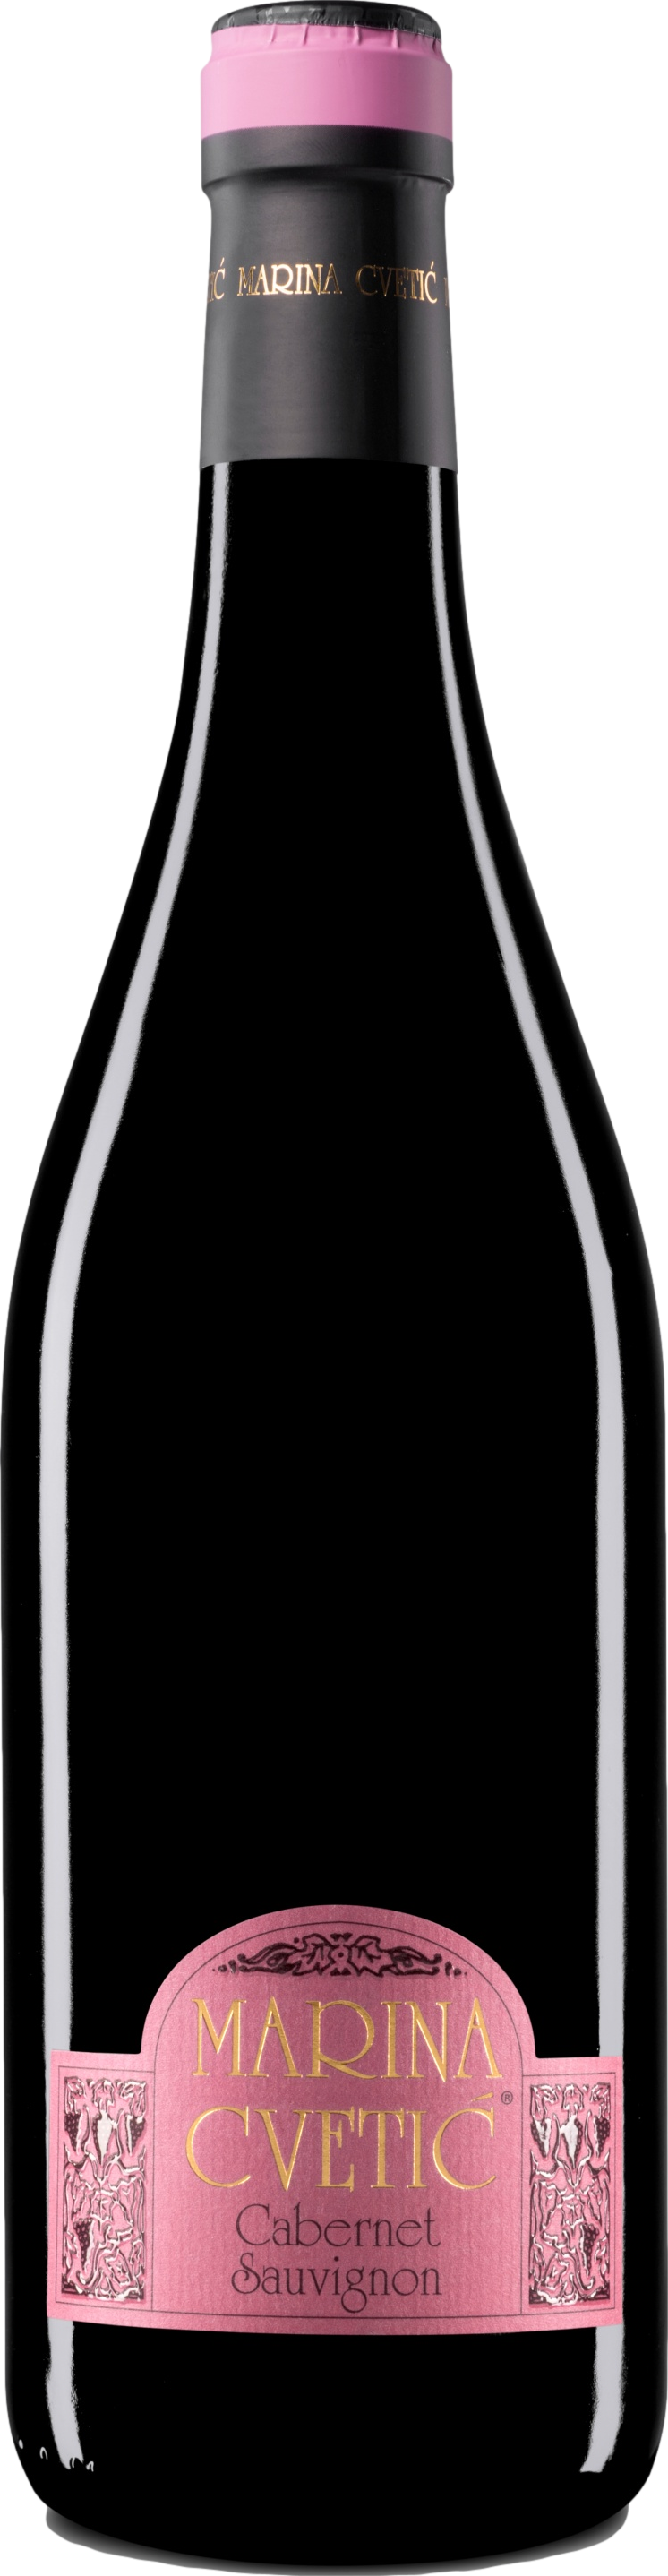 Masciarelli Marina Cvetic Cabernet Sauvignon 2015 Červené 14.5% 0.75 l